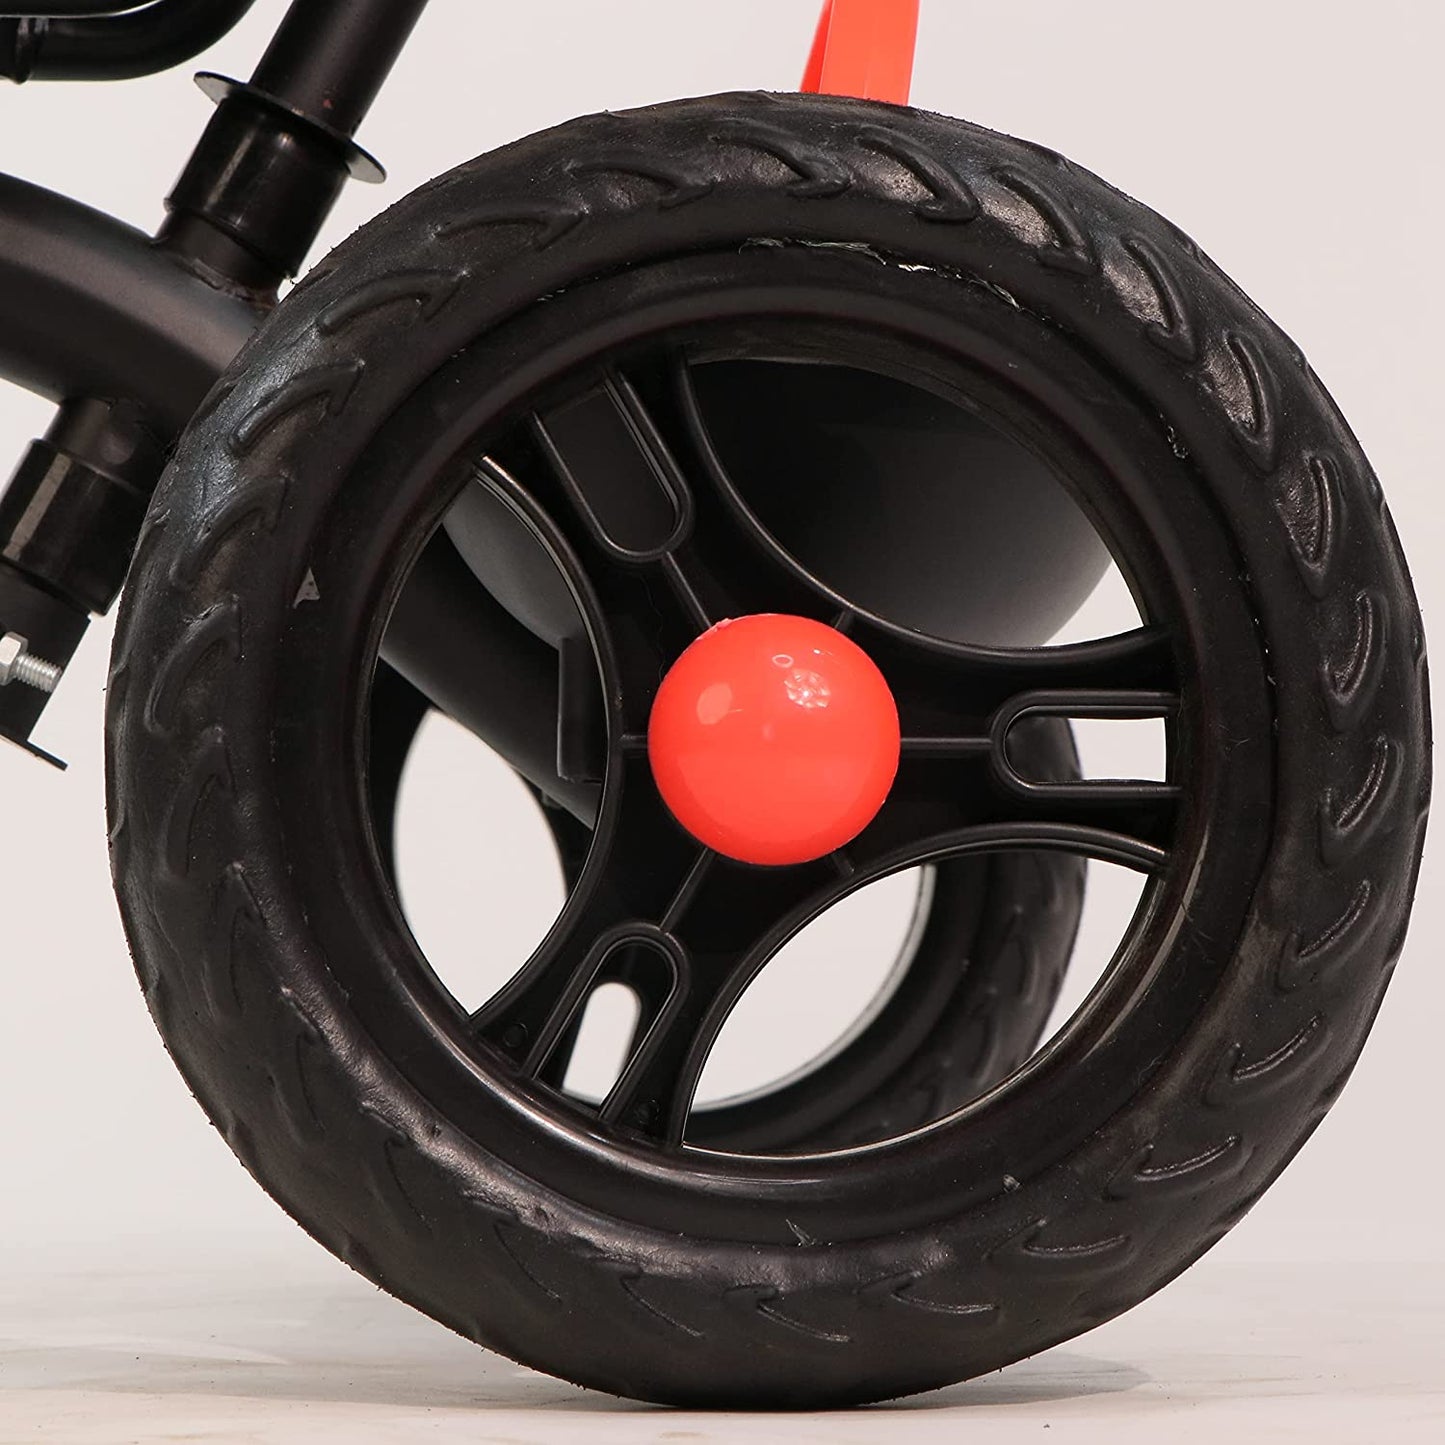 Luusa GT500 Hooded Tricycle Plug N Play Kids / Baby Tricycle with Parental Control (Red)